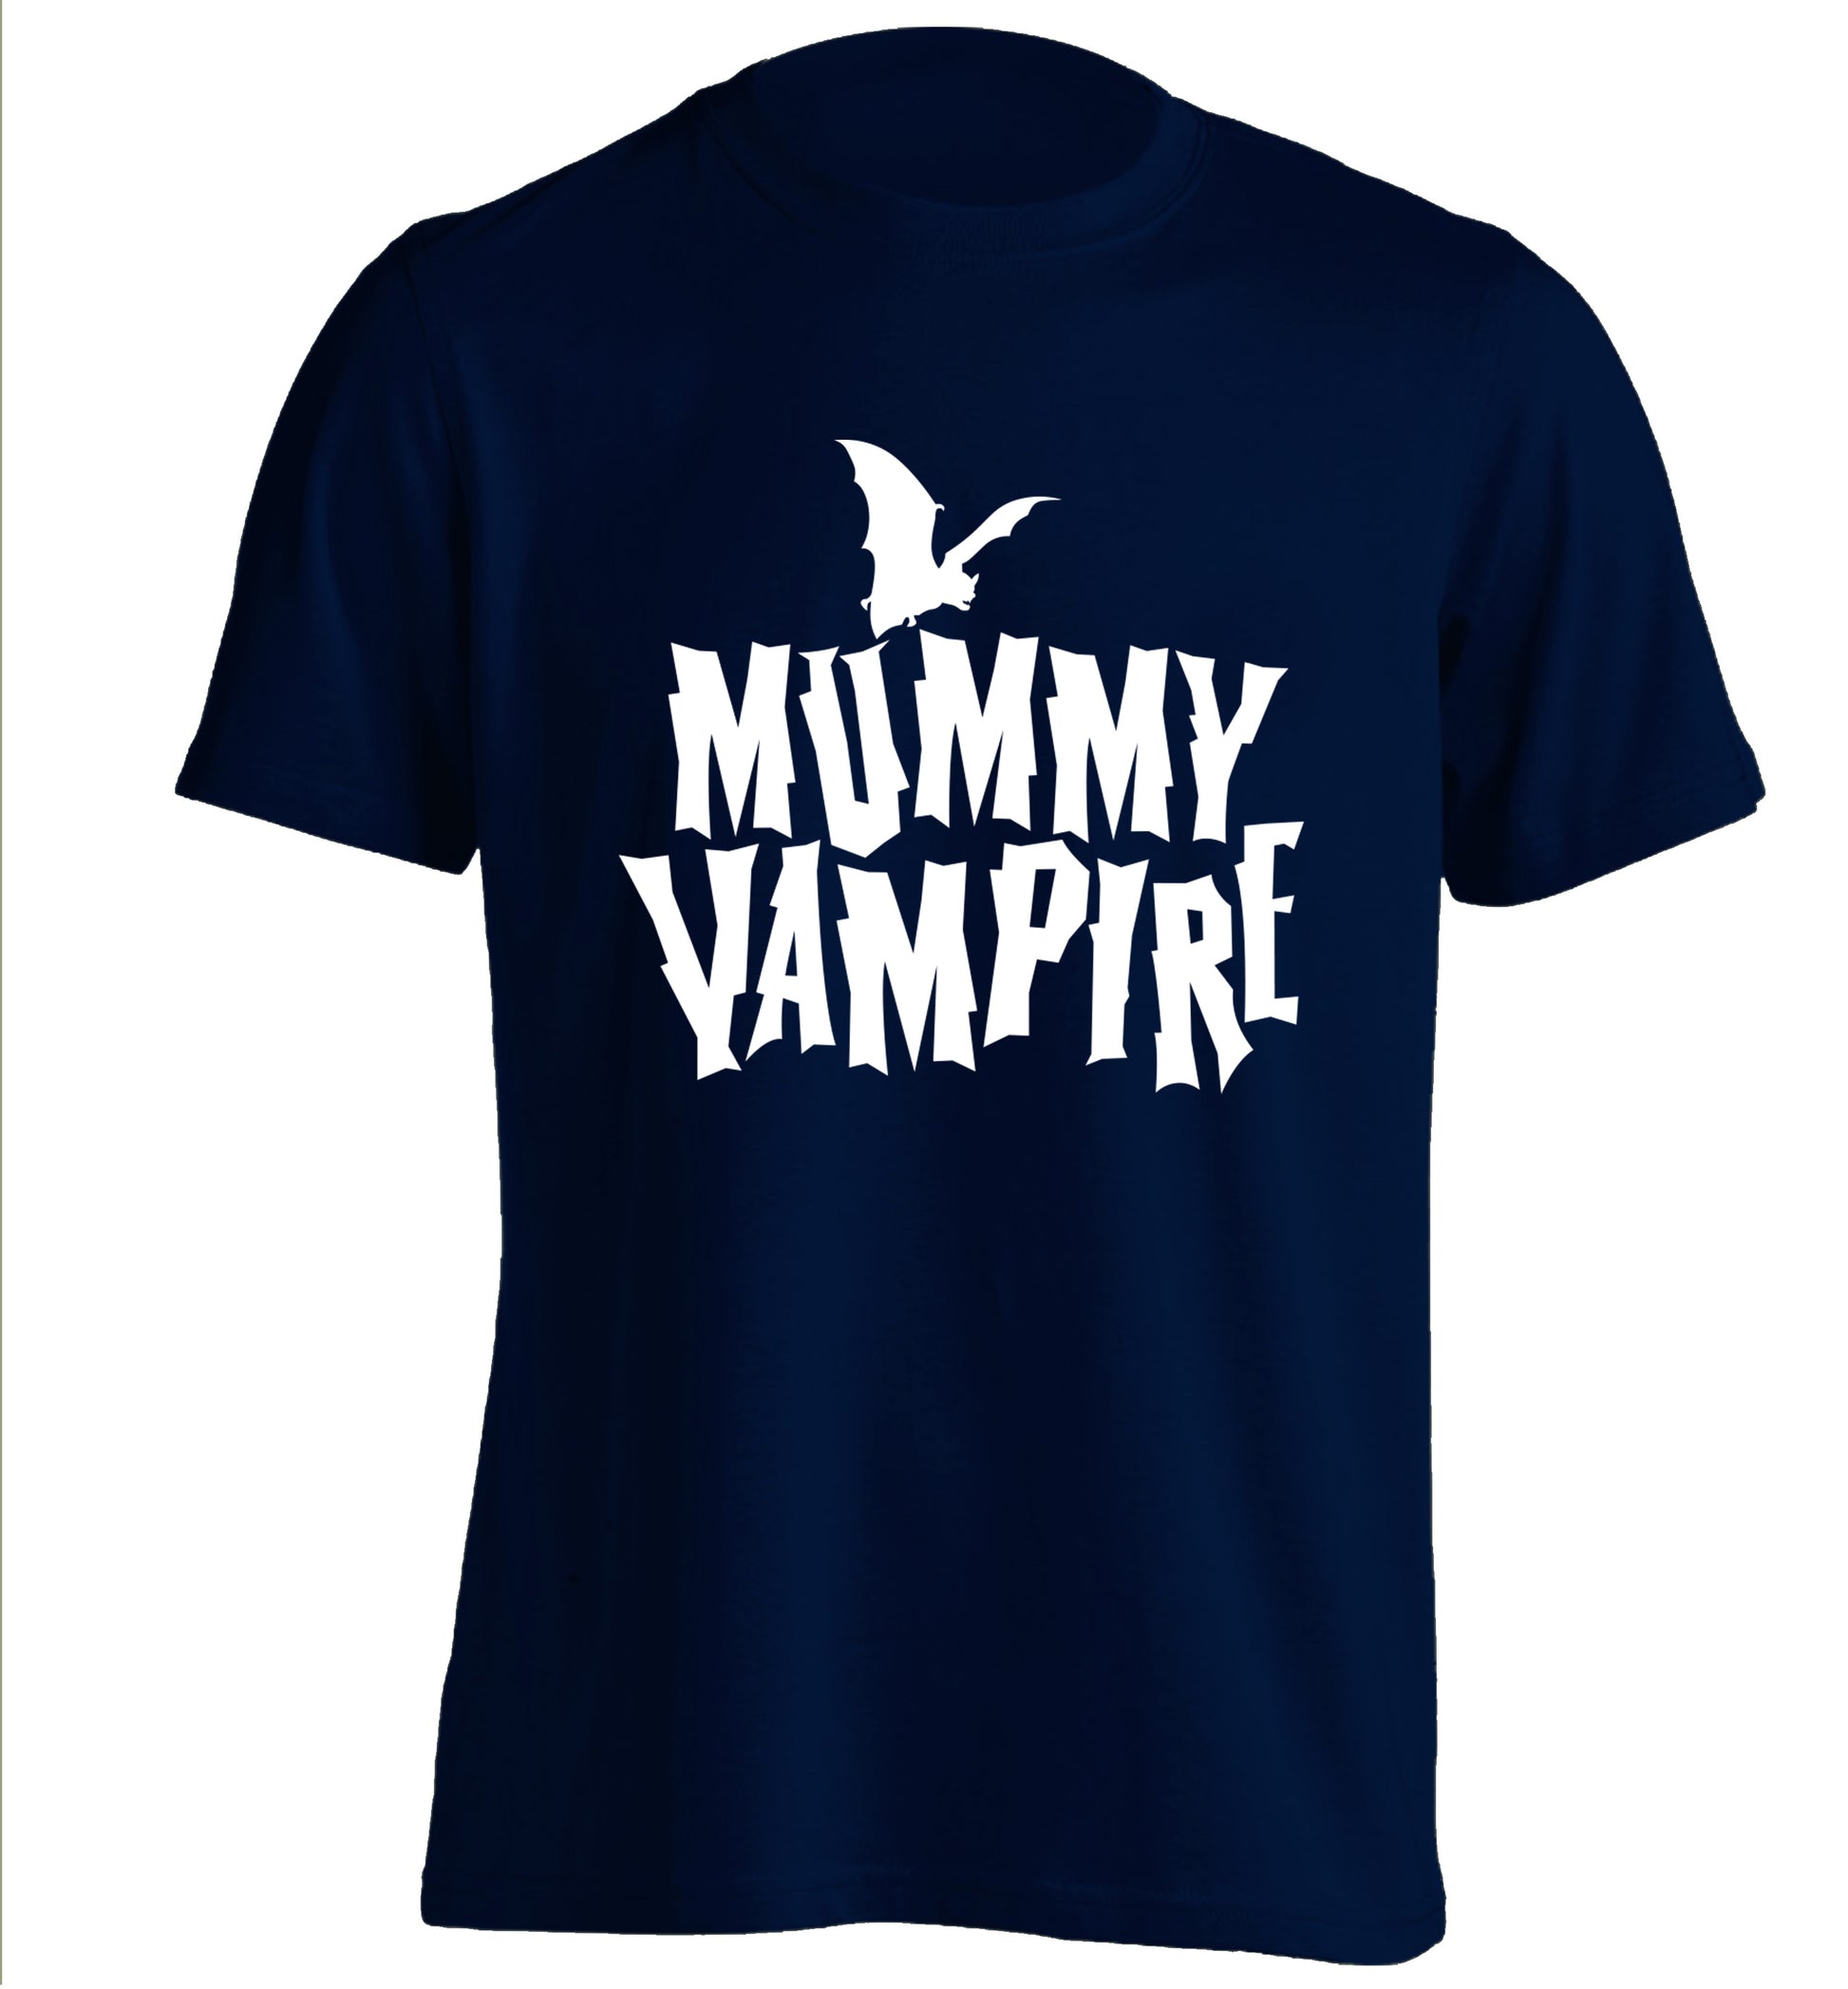 Mummy vampire adults unisex navy Tshirt 2XL